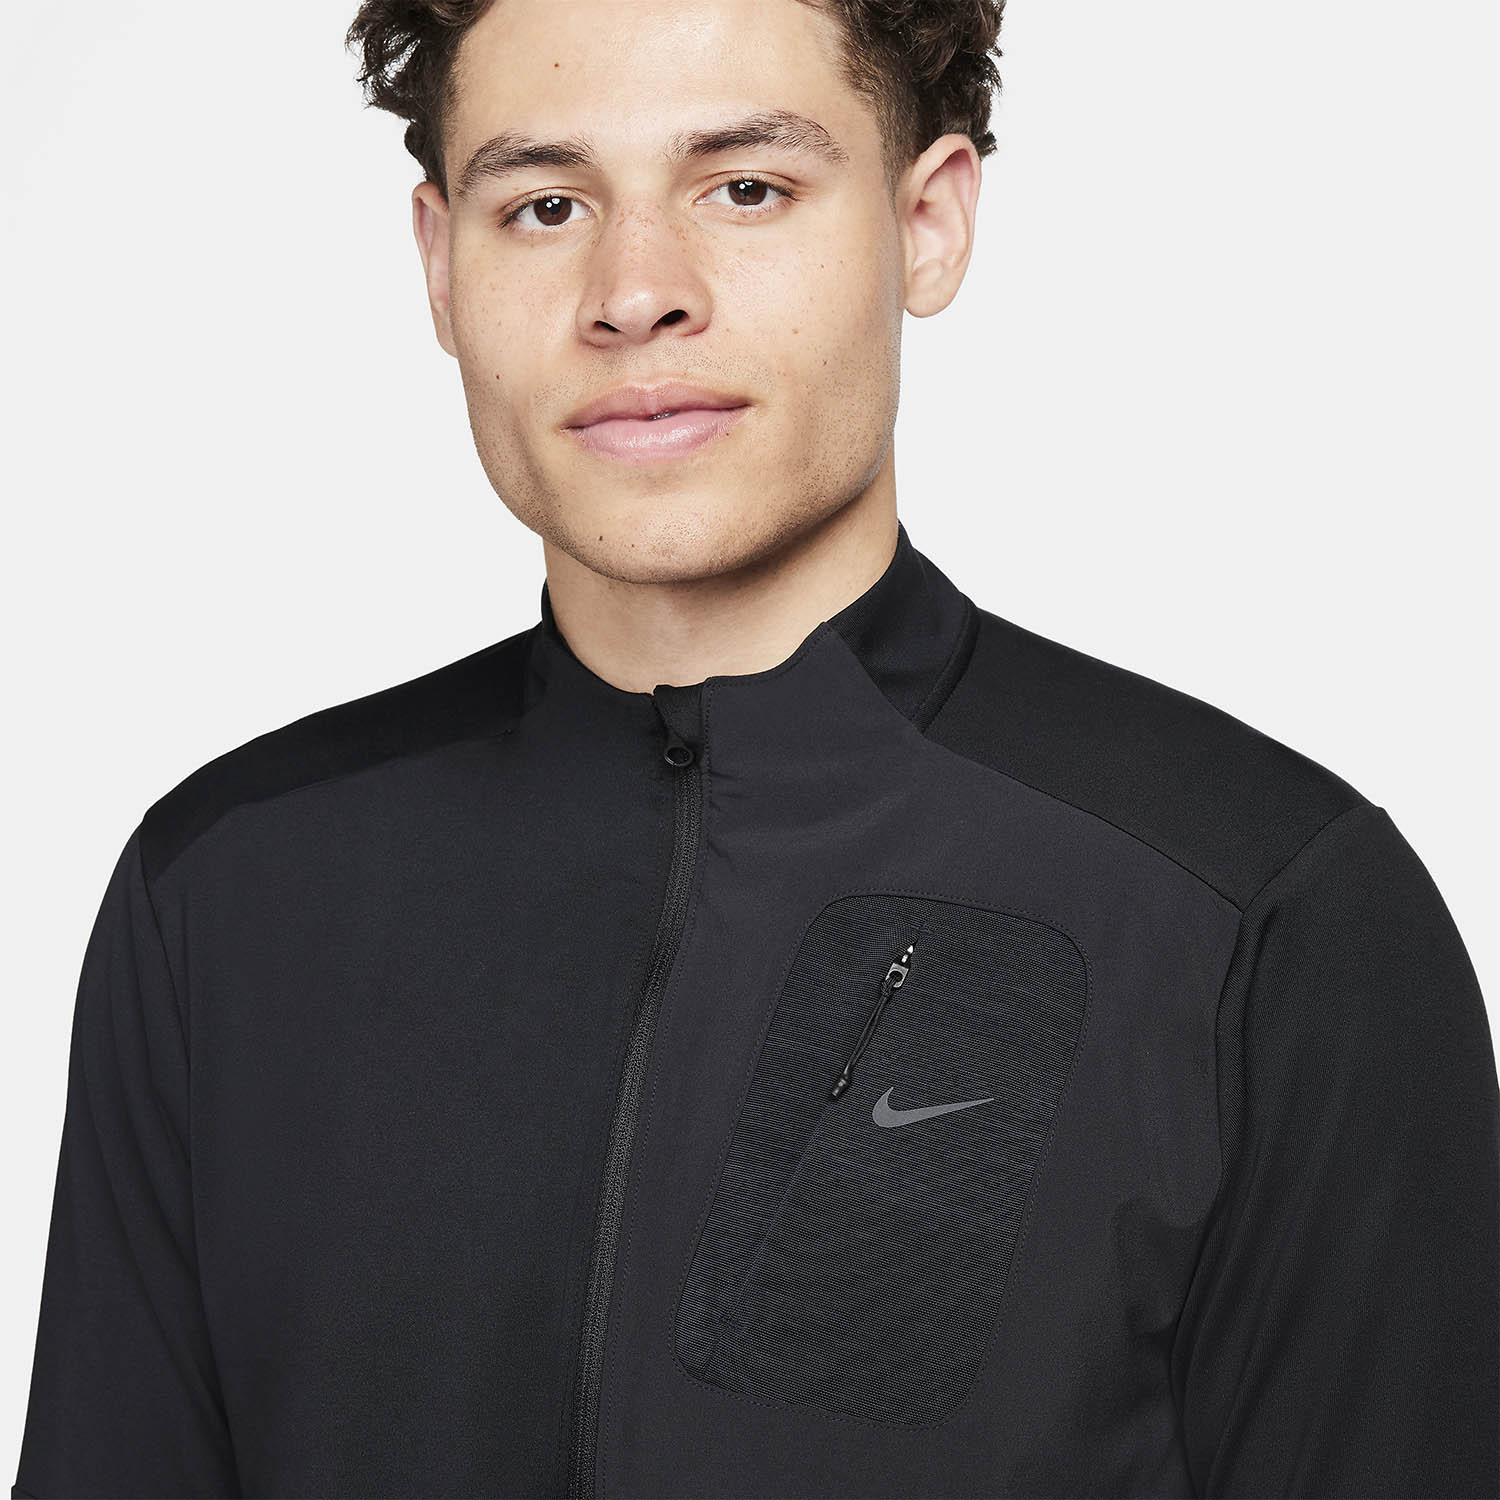 Nike Dri-FIT Element Shirt - Black/Black Reflective